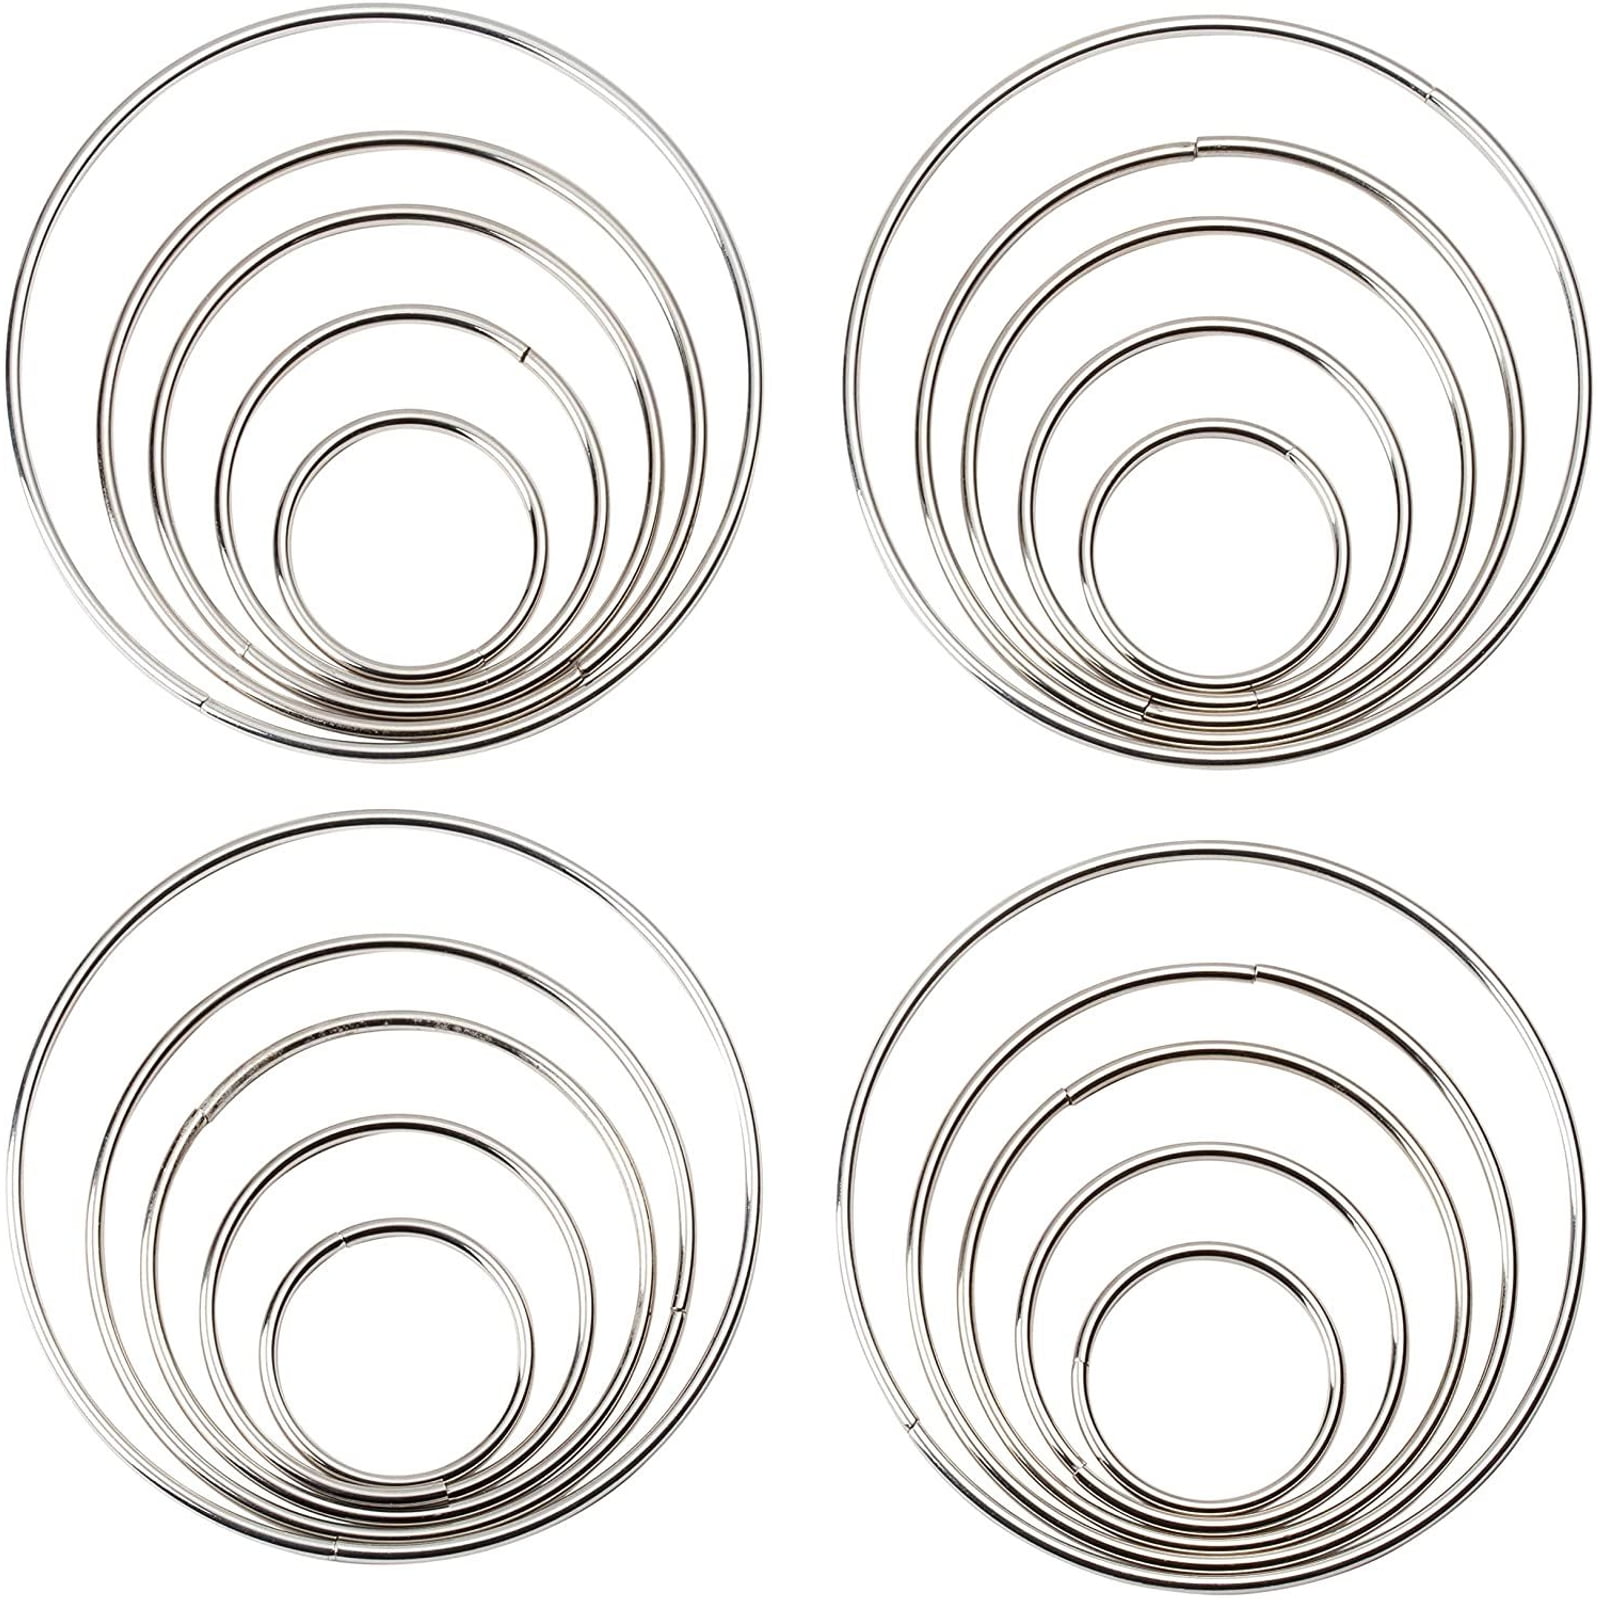 Lot of 10 Steel Metal Macrame Craft Dreamcatcher Round Rings Hoops 7" Inch